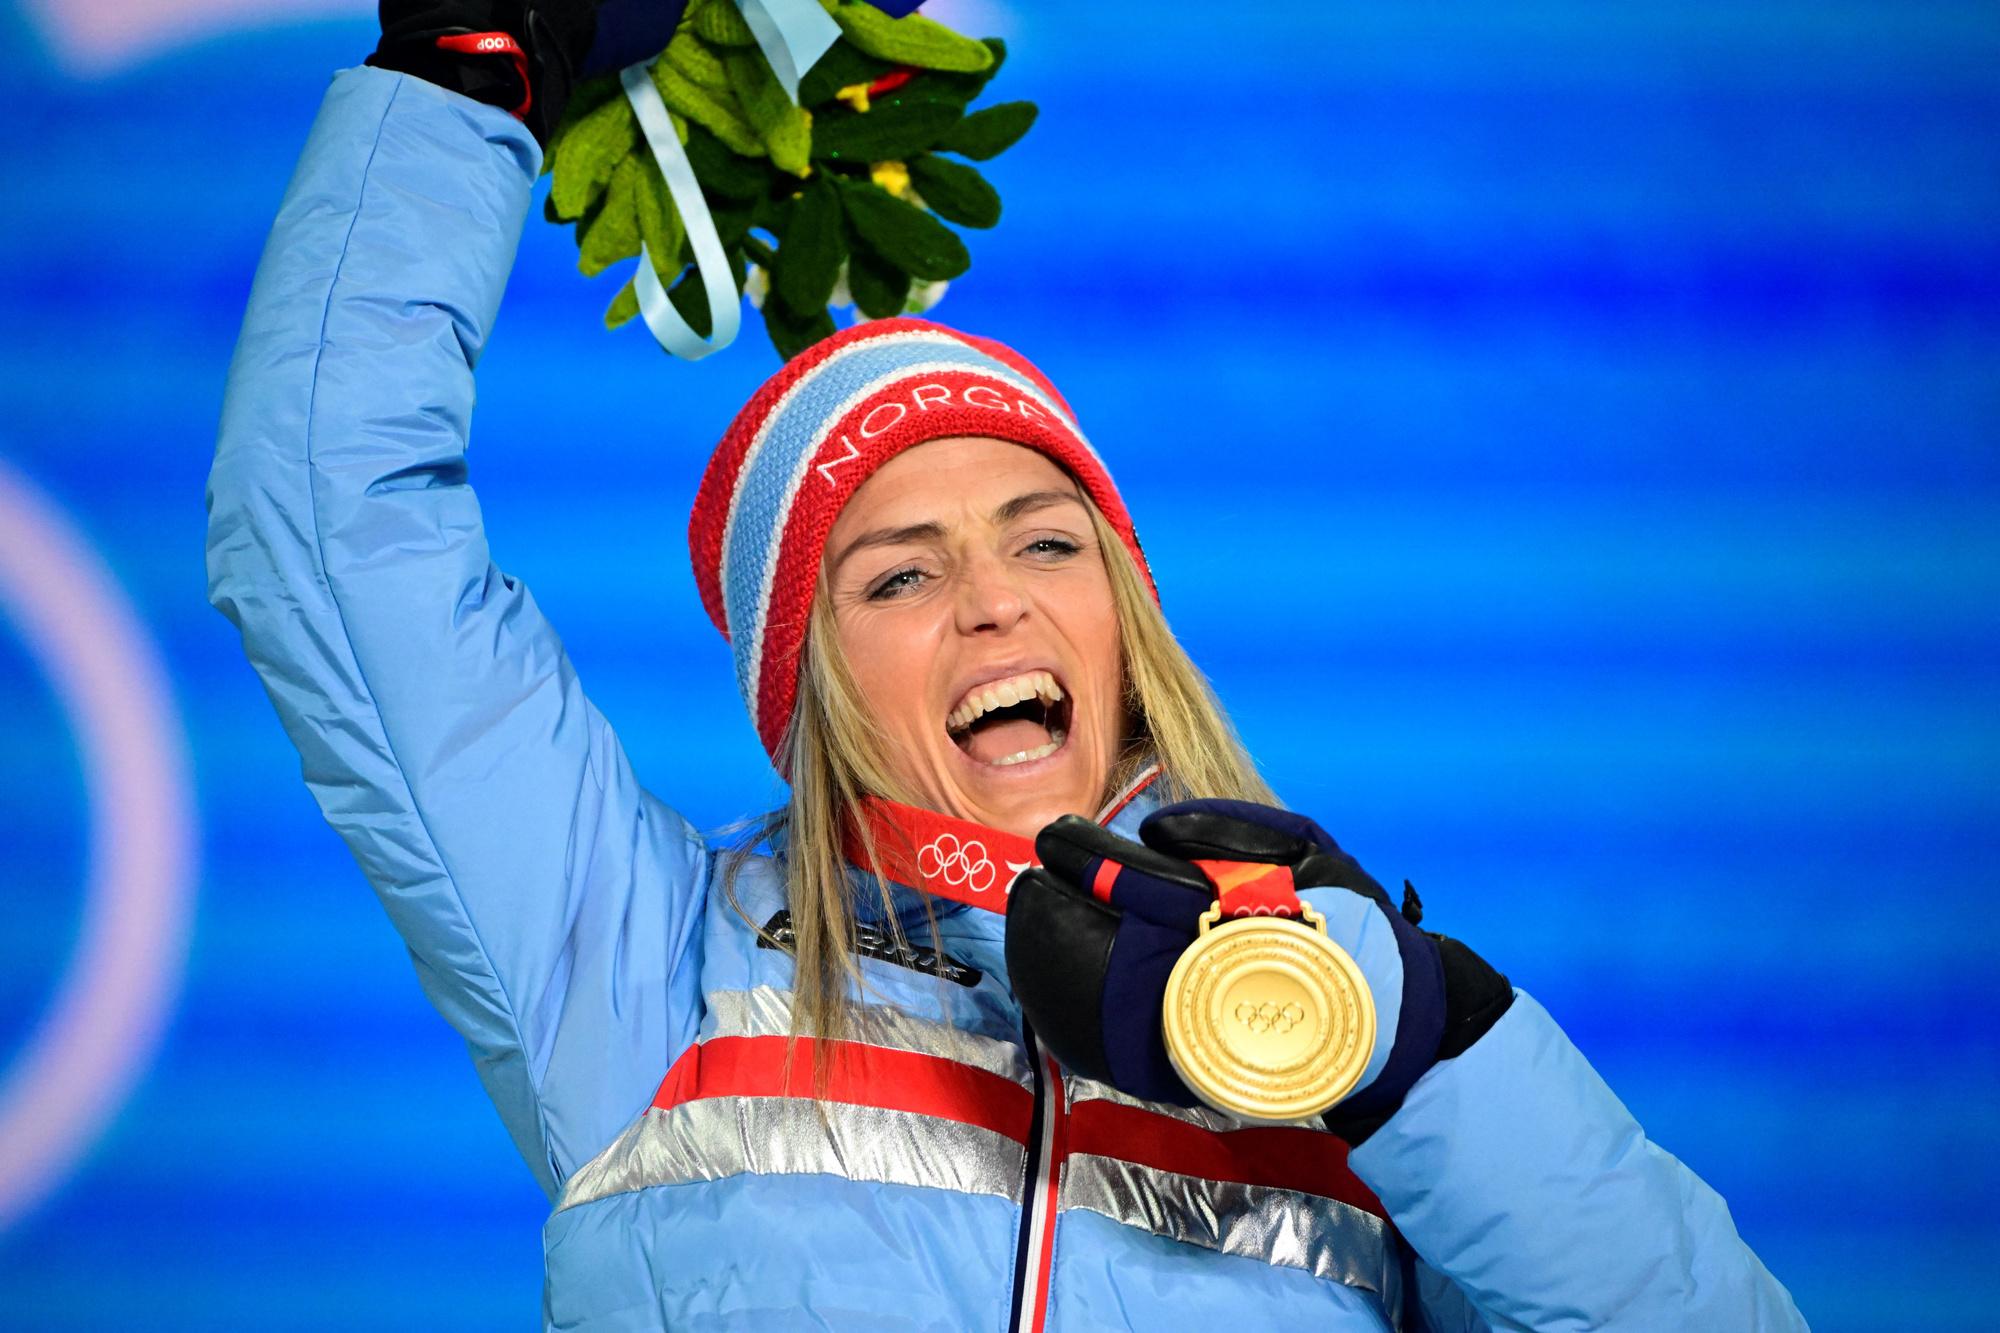 Therese Johaug was al de beste op de skiathlon.